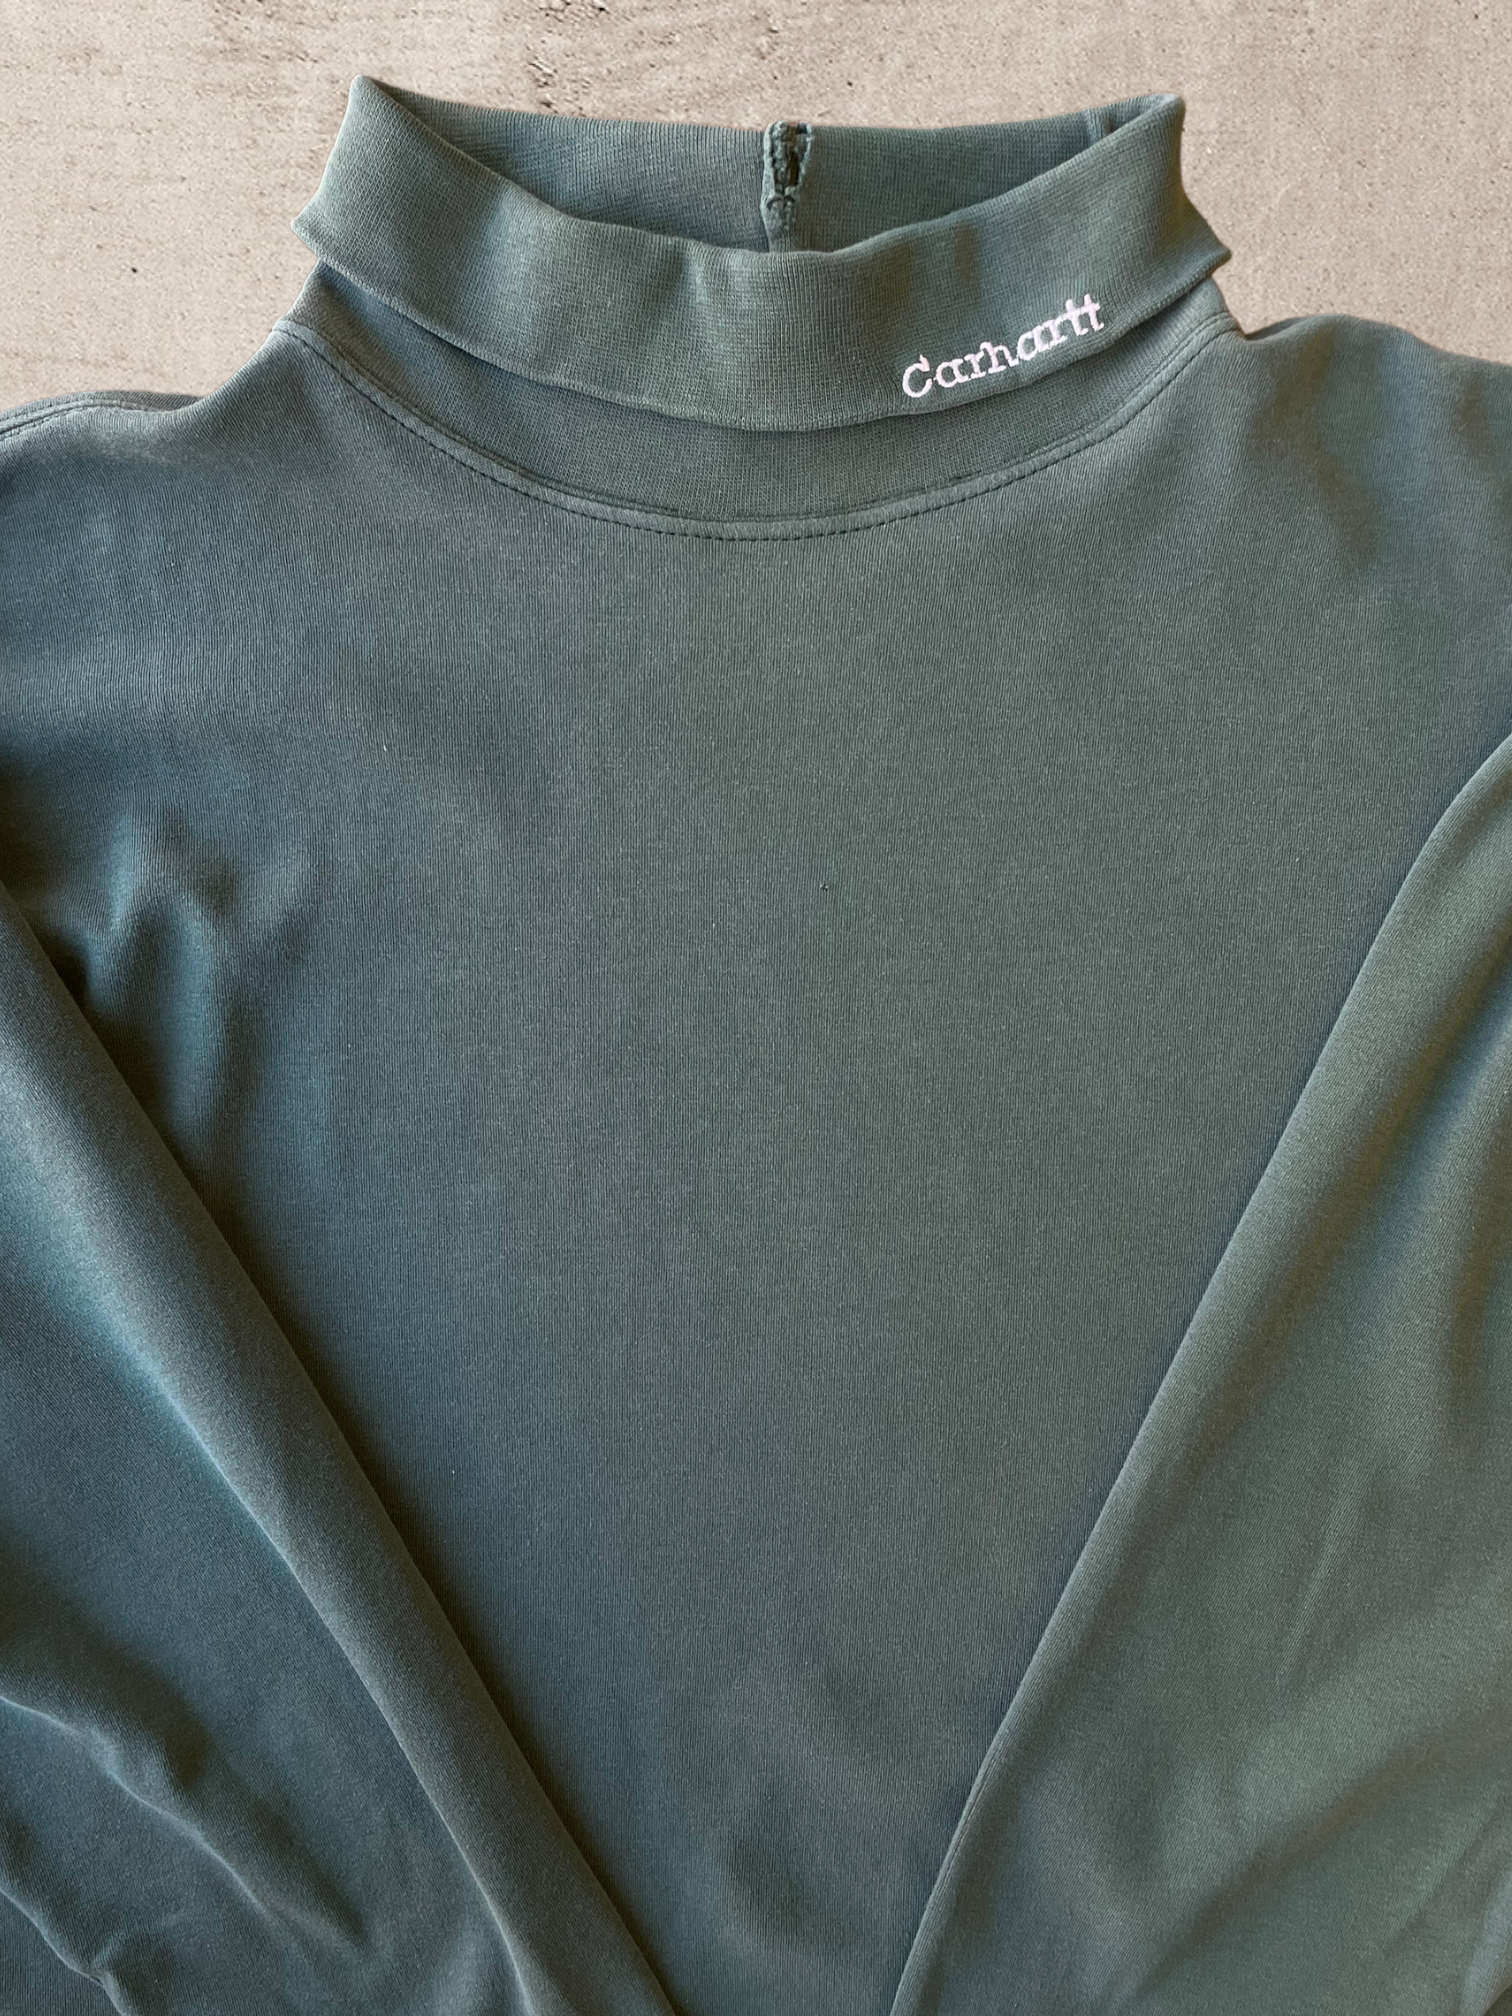 Vintage Carhartt Green Turtle Neck T-Shirt - XL